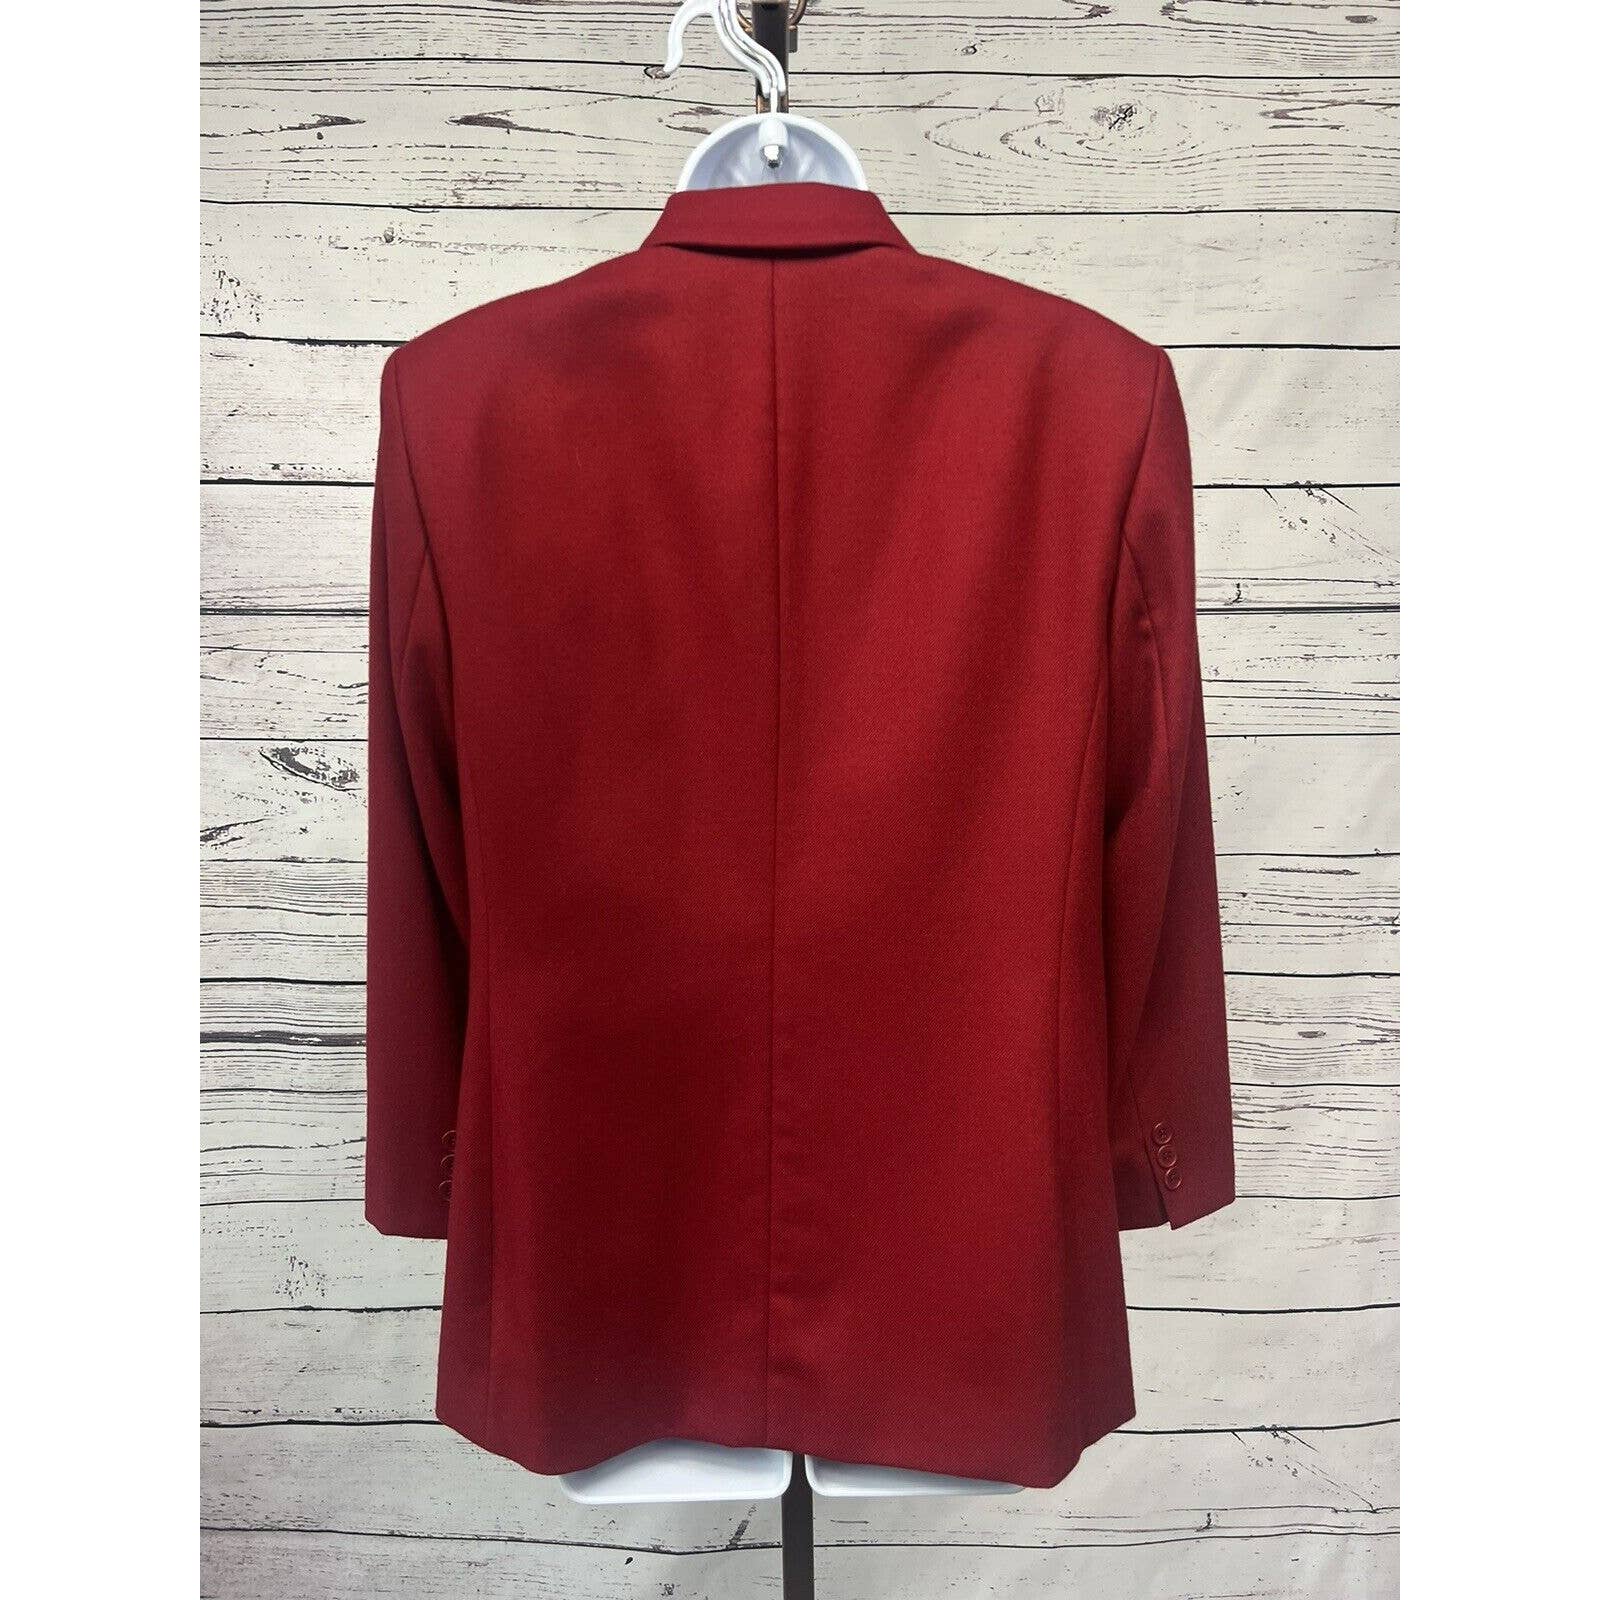 Pendleton One Button Blazer Women's Size 8 Petite 100% Wool Red Classic